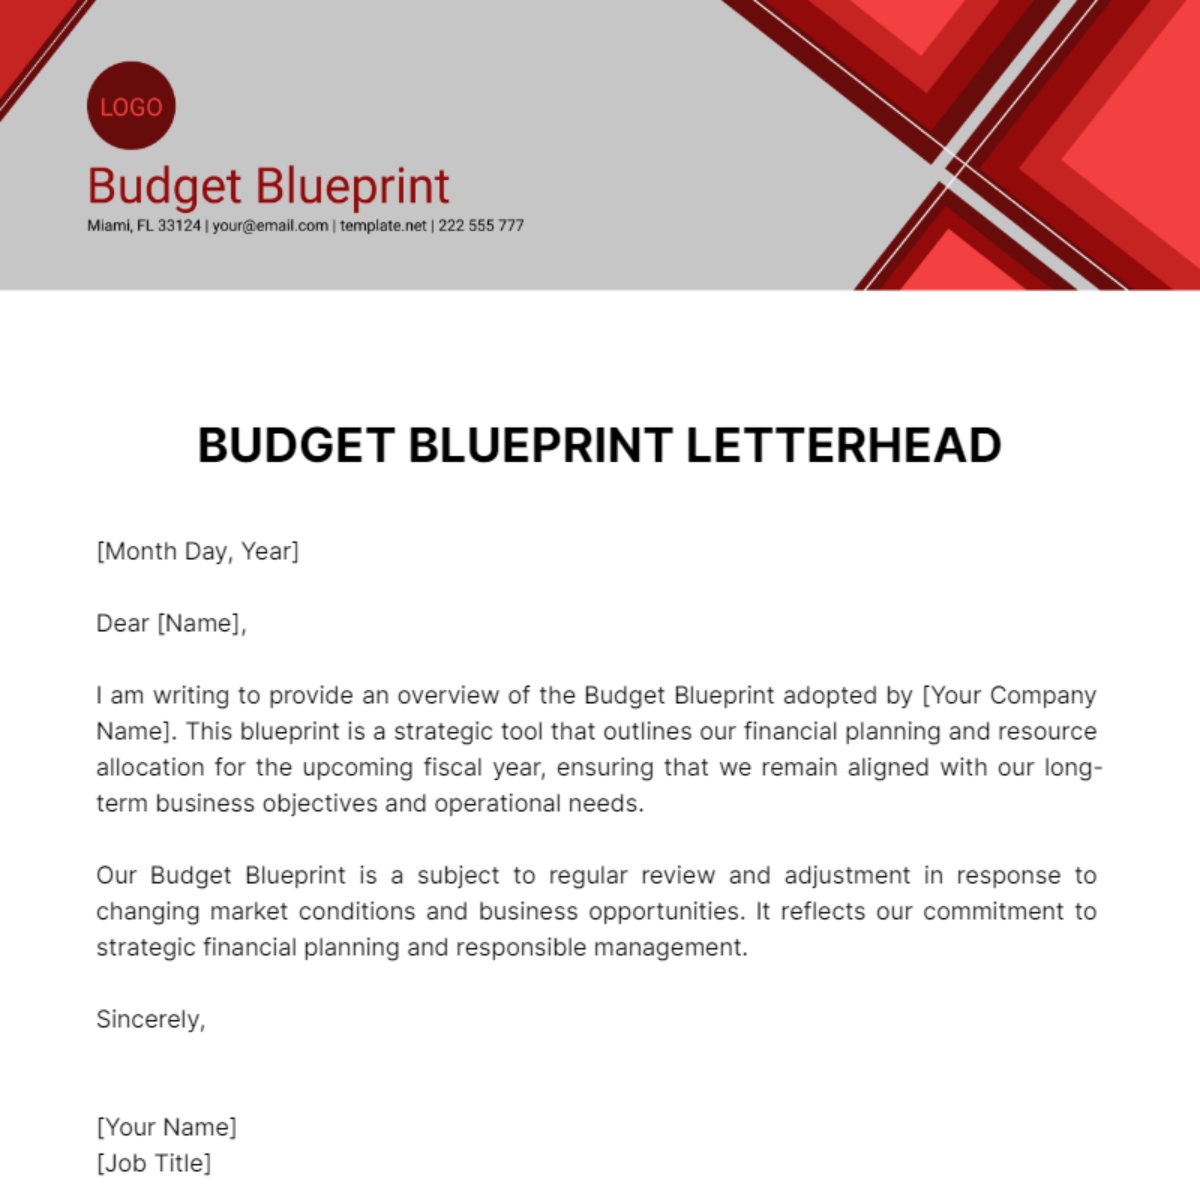 Free Budget Blueprint Letterhead Template